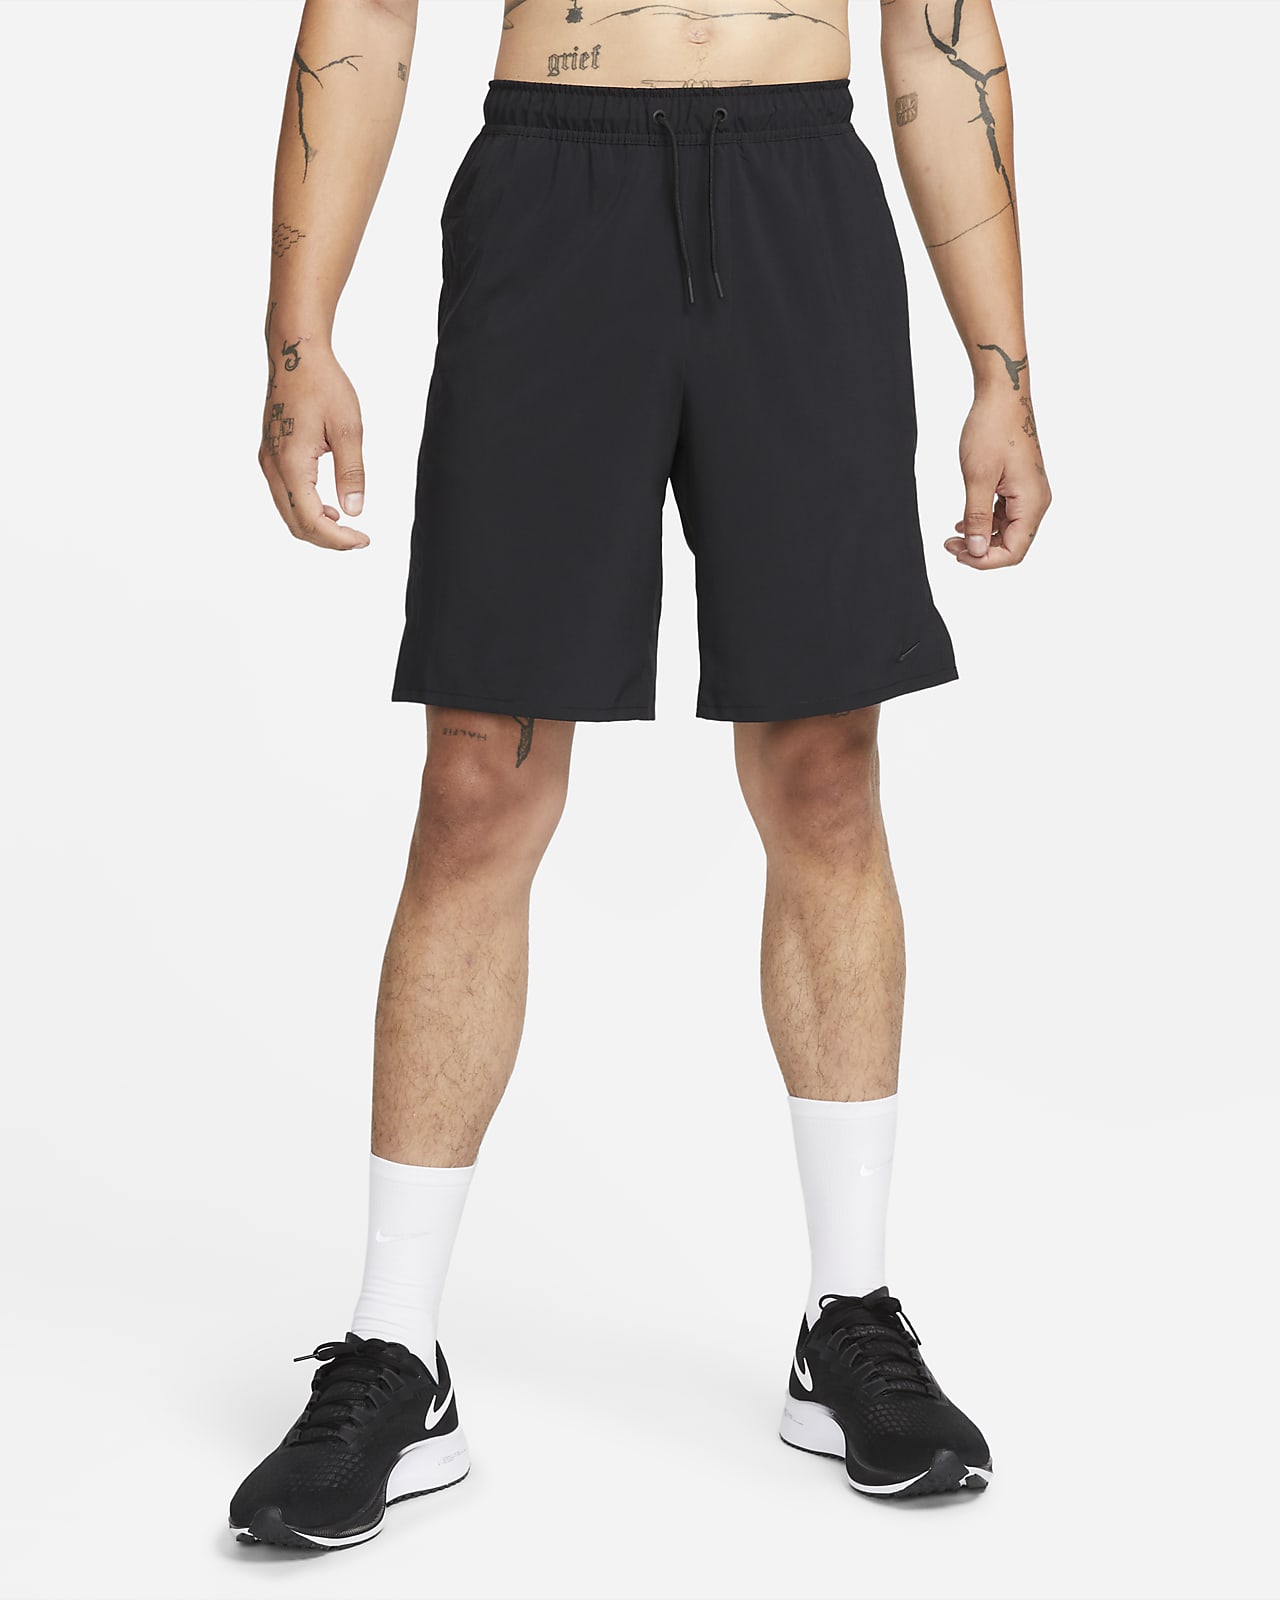 Nike Unlimited vielseitige Dri-FIT Herrenshorts ohne Futter (ca. 23 cm)